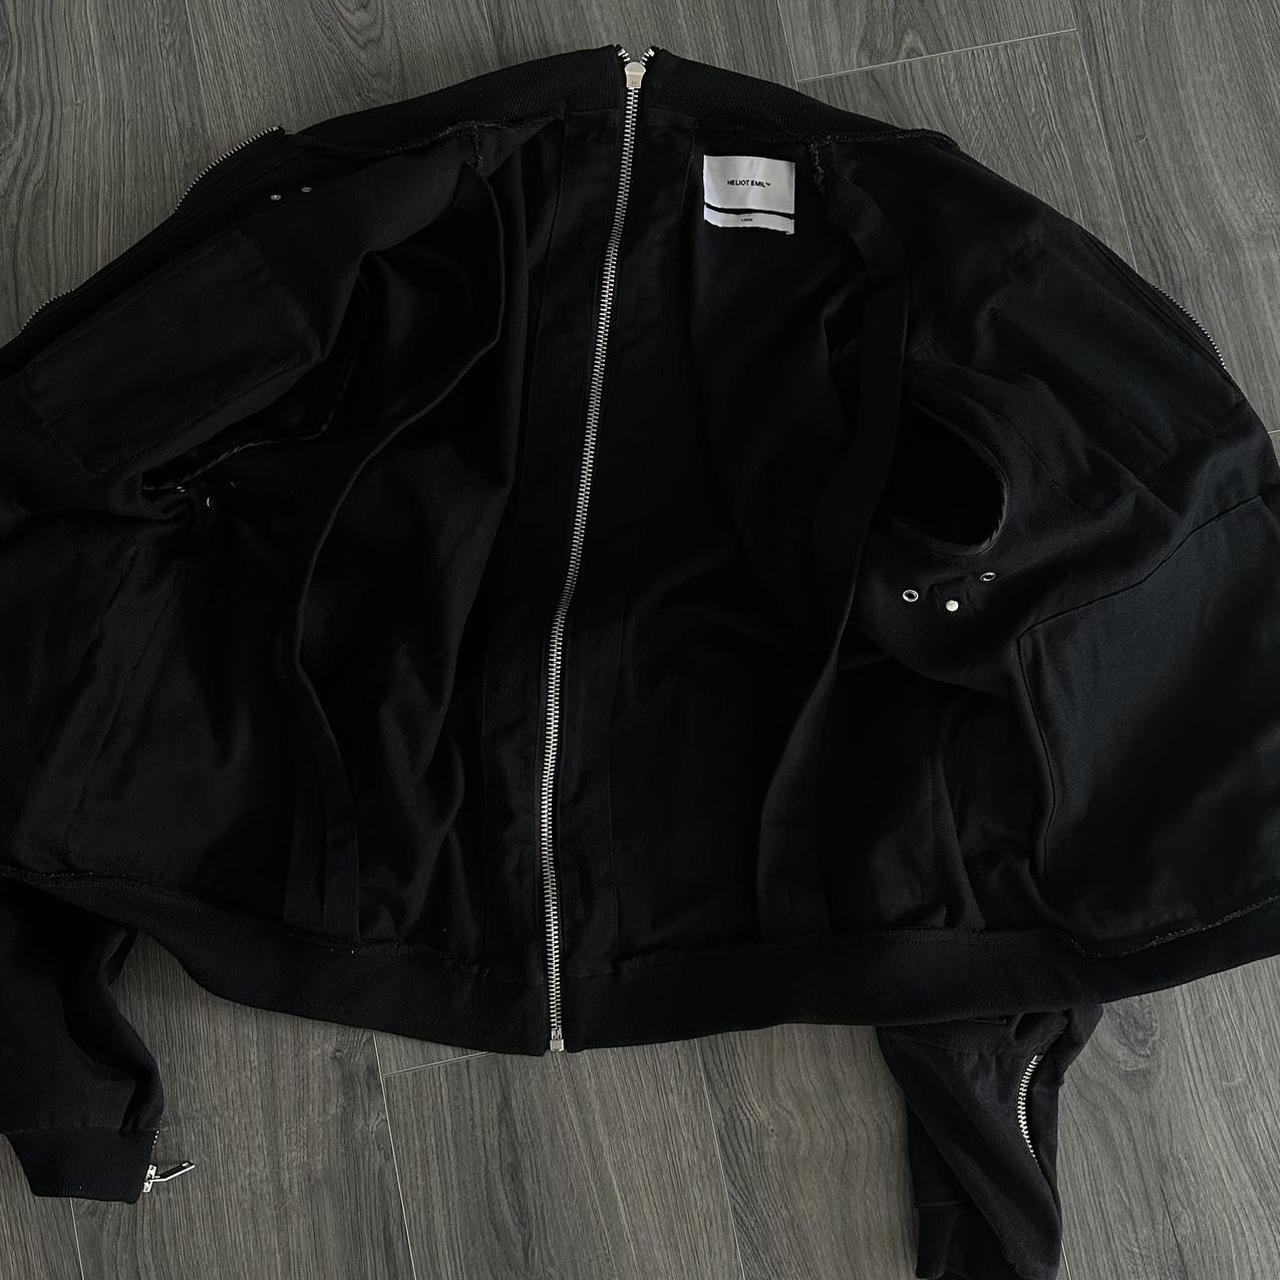 HELIOT EMIL Jacket Size Large Condition:9/10 Bought... - Depop